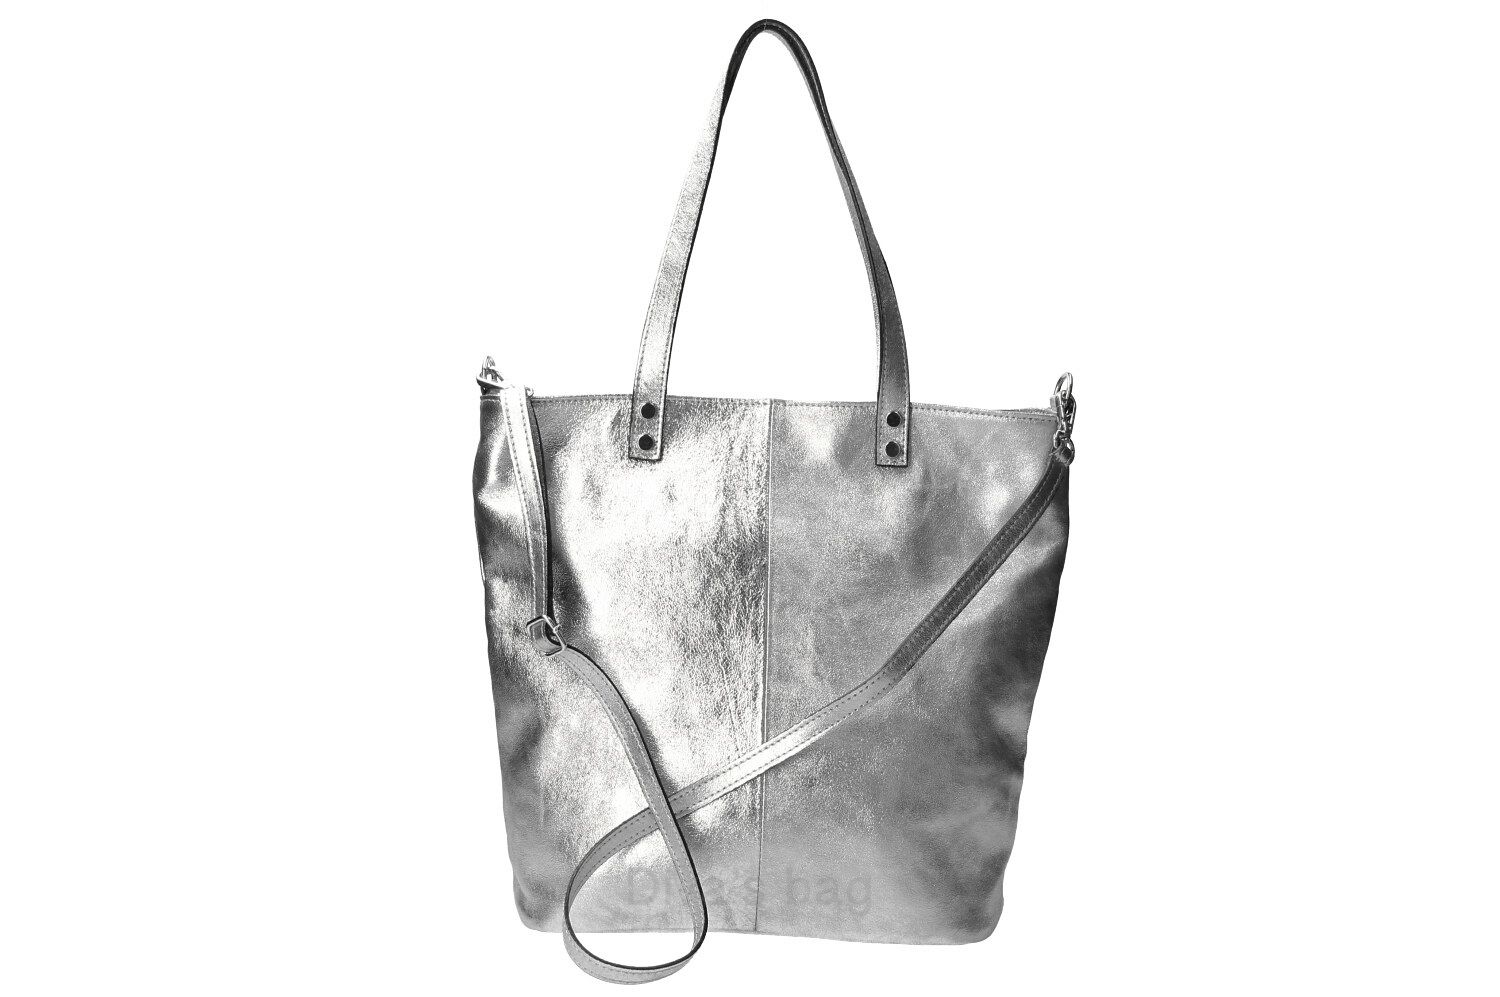 Juliette - Genuine Leather Maxi Bag